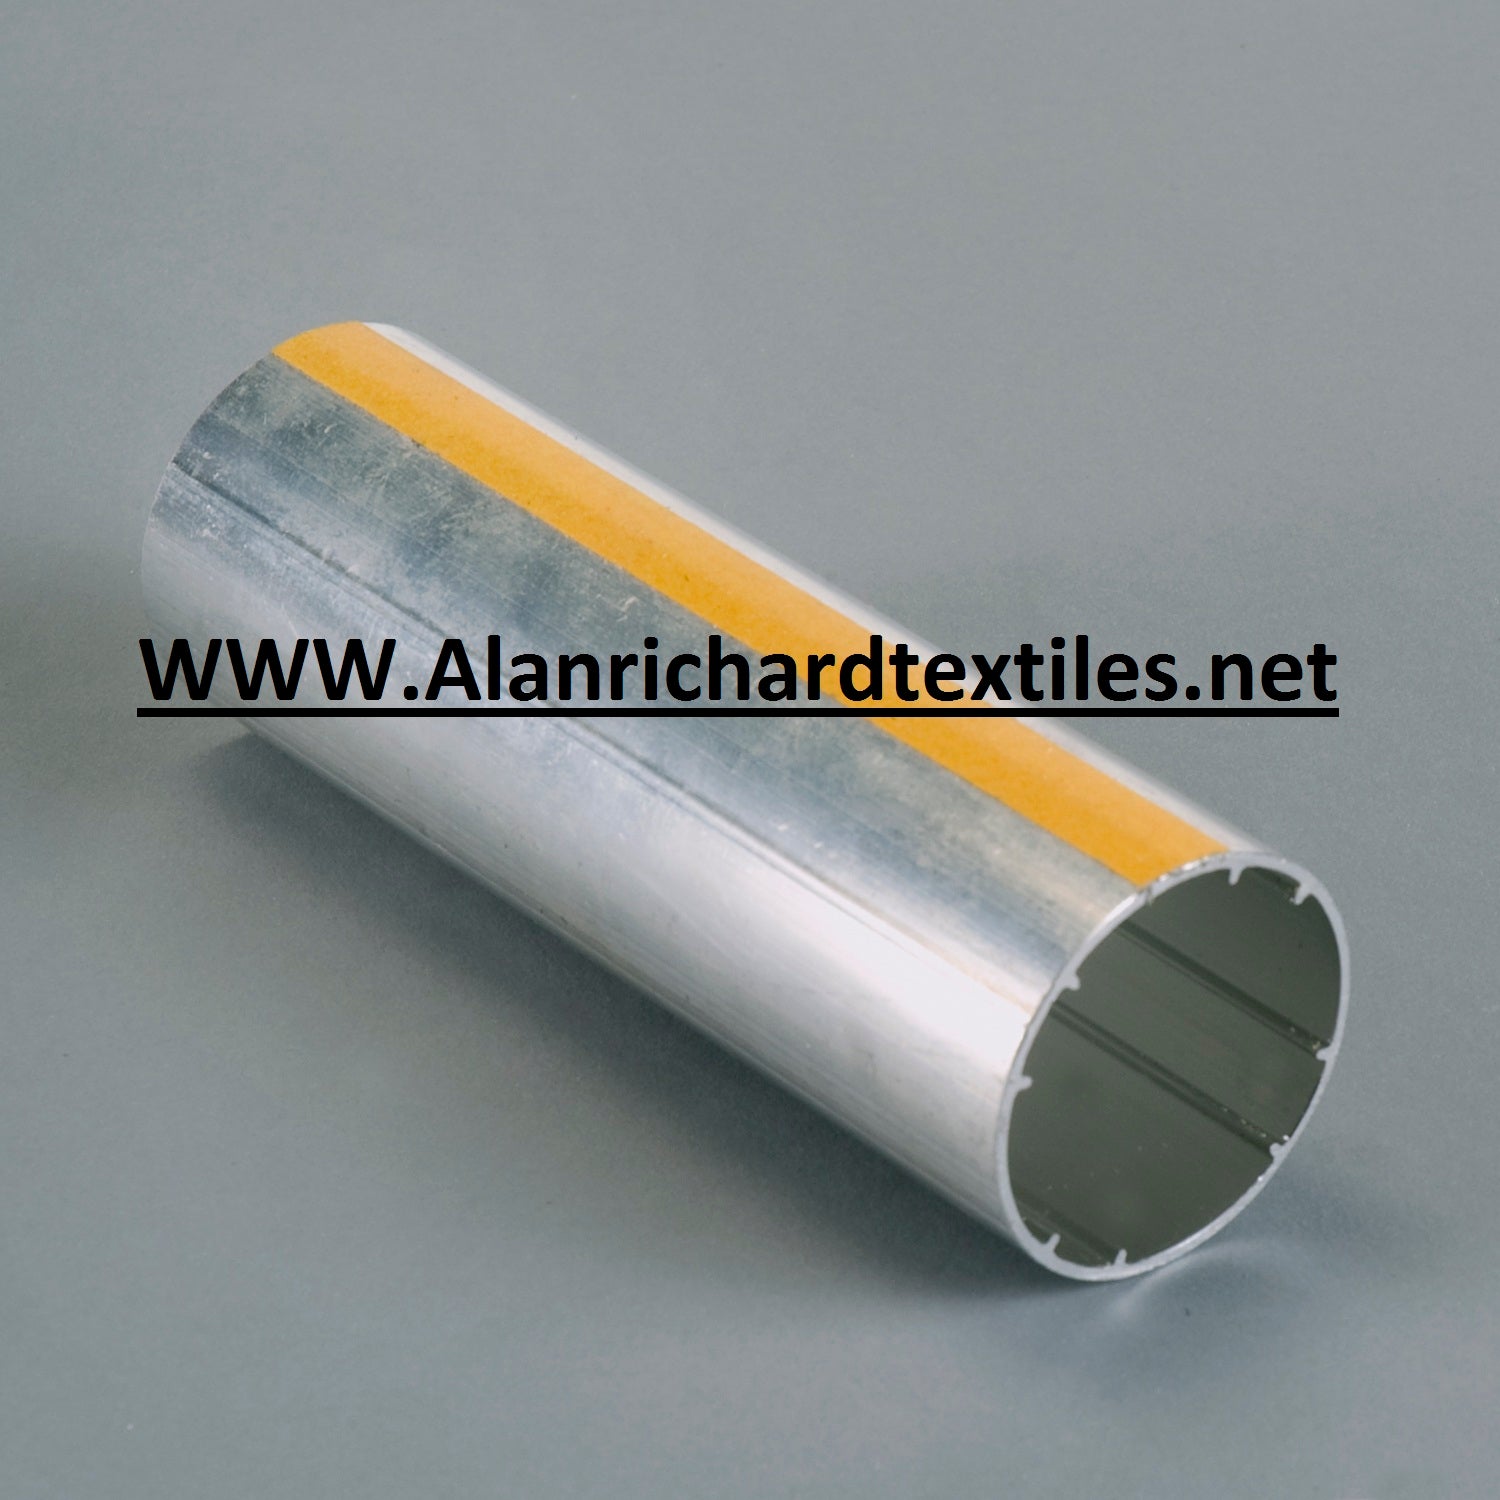 3-1/4" Clutch Tube - 16' - Alan Richard Textiles, LTD Clutch Tubes